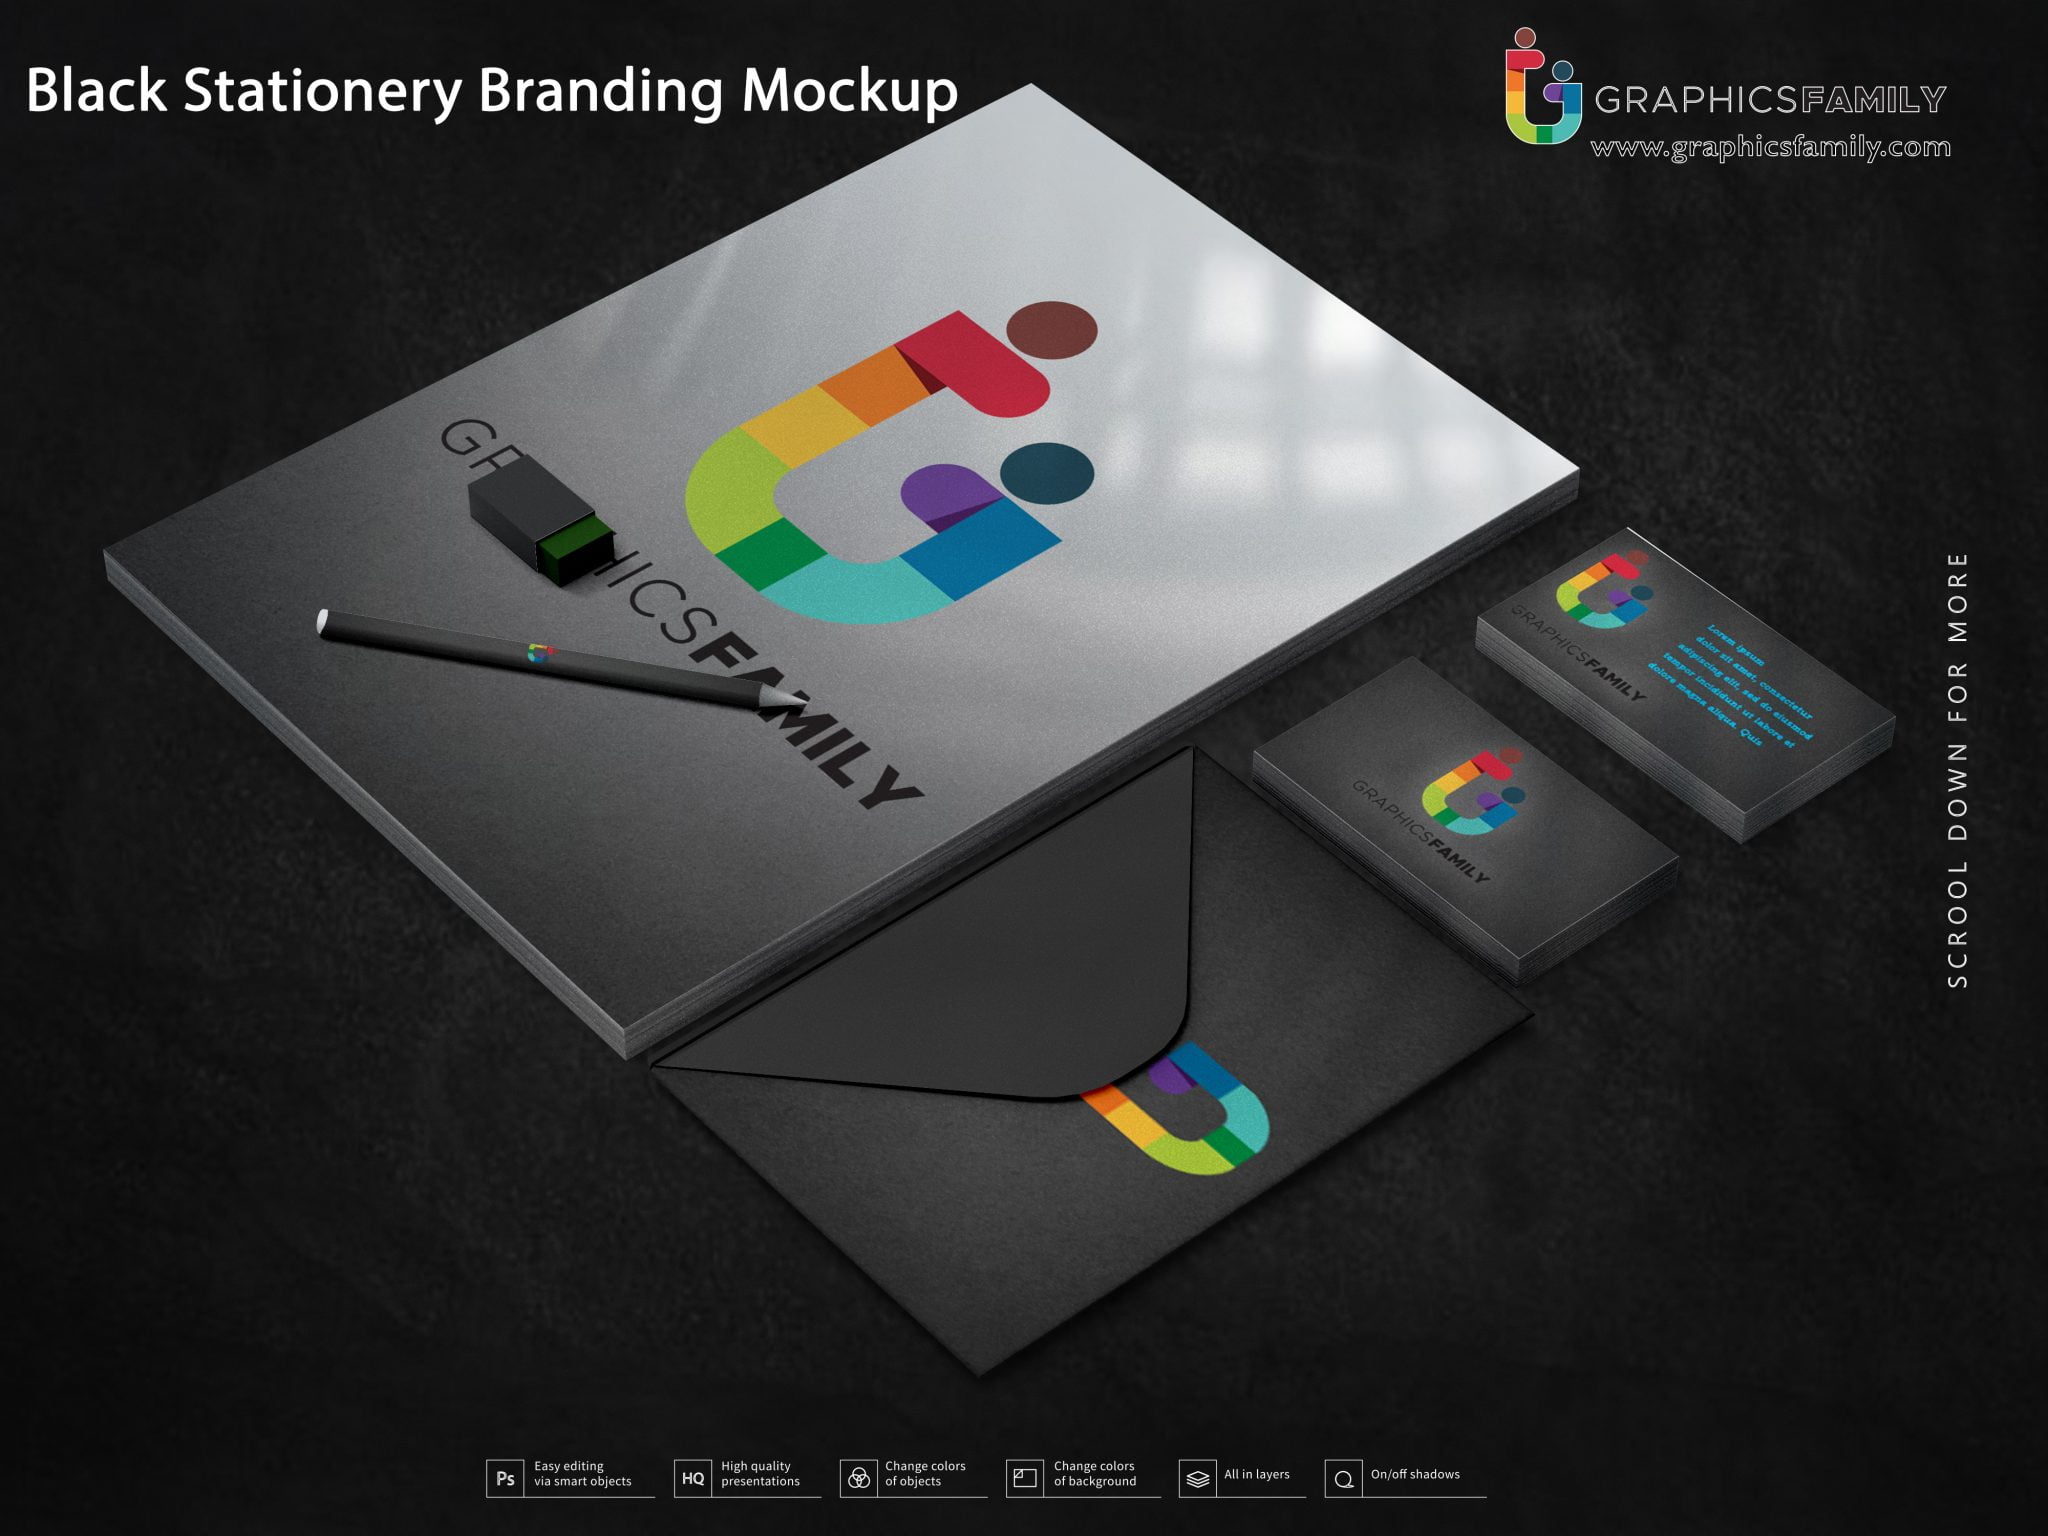 Download Black Stationery Branding Mockup - GraphicsFamily